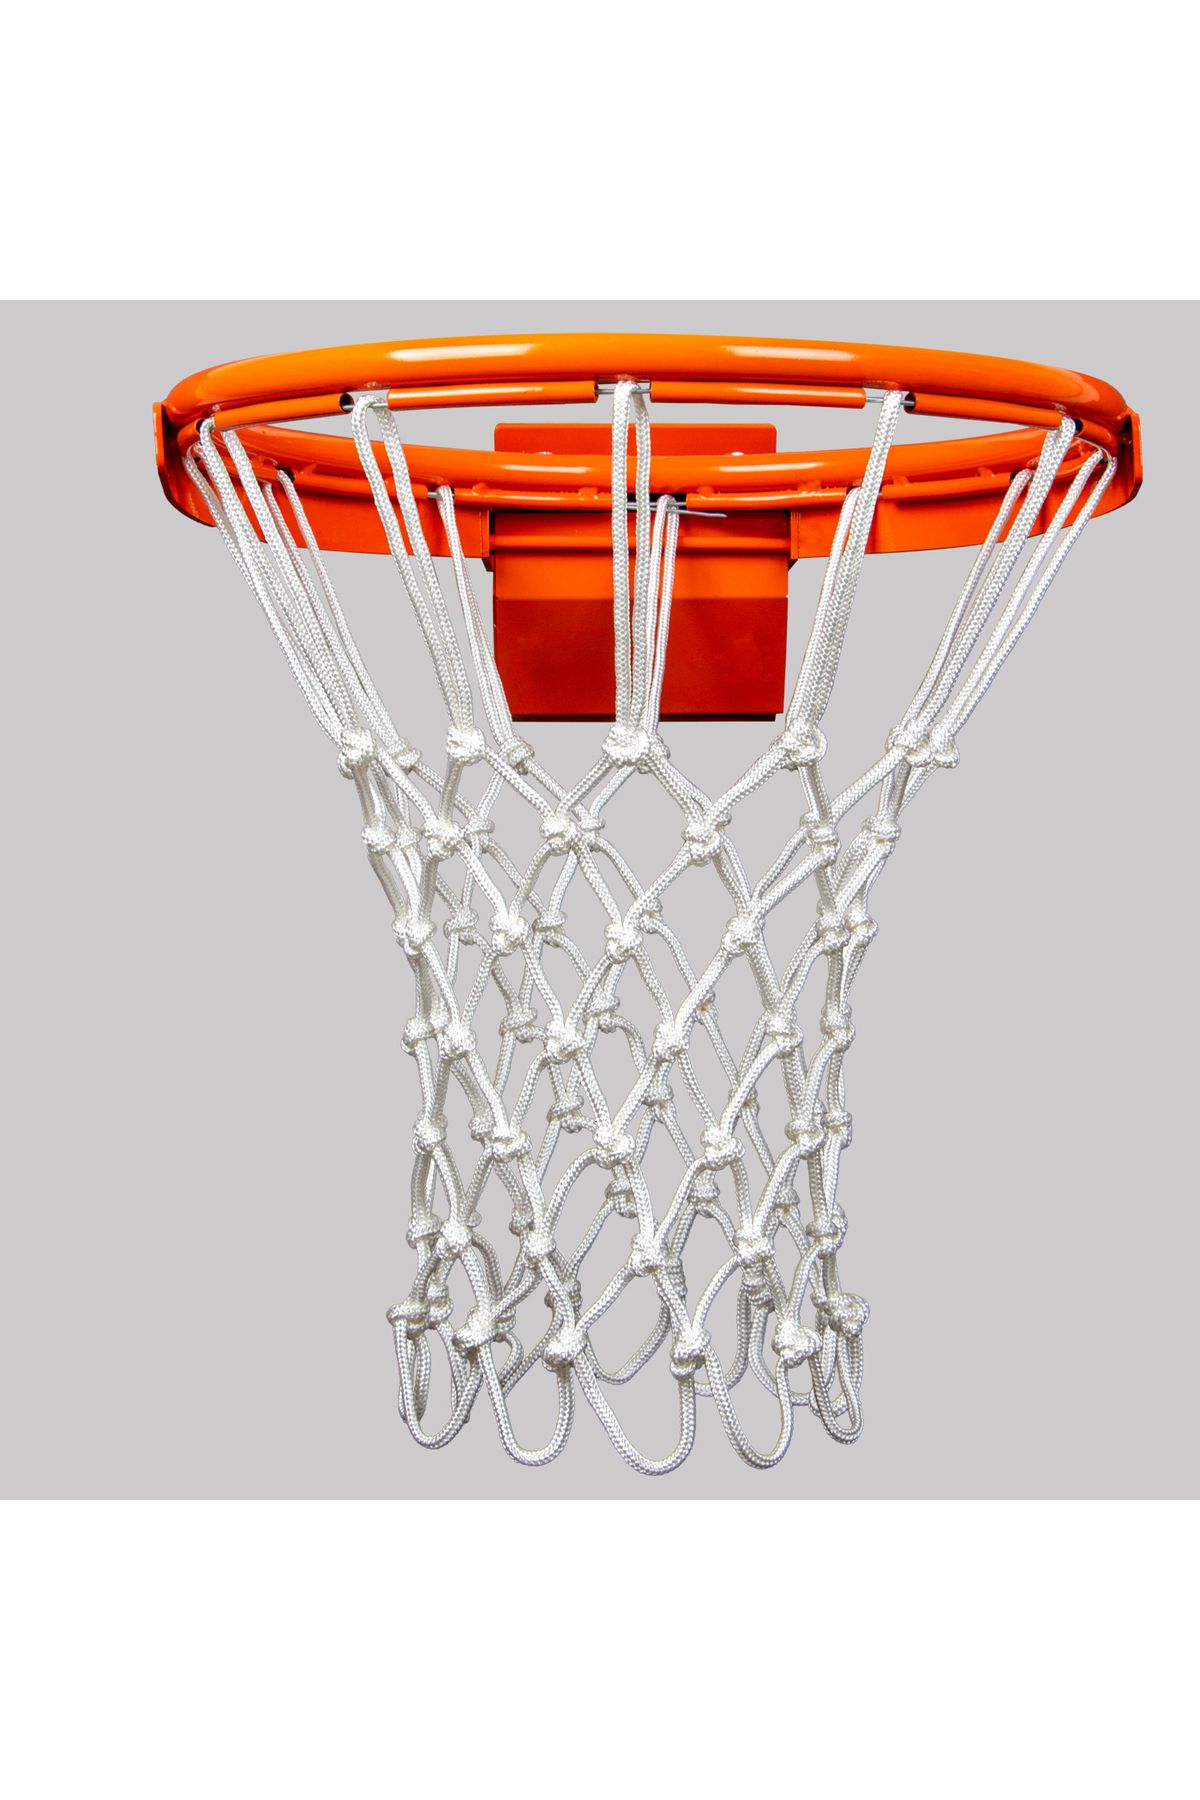 Nodes Basketbol Pota Filesi - Profesyonel - NBA - 6mm - Polyester - Çift